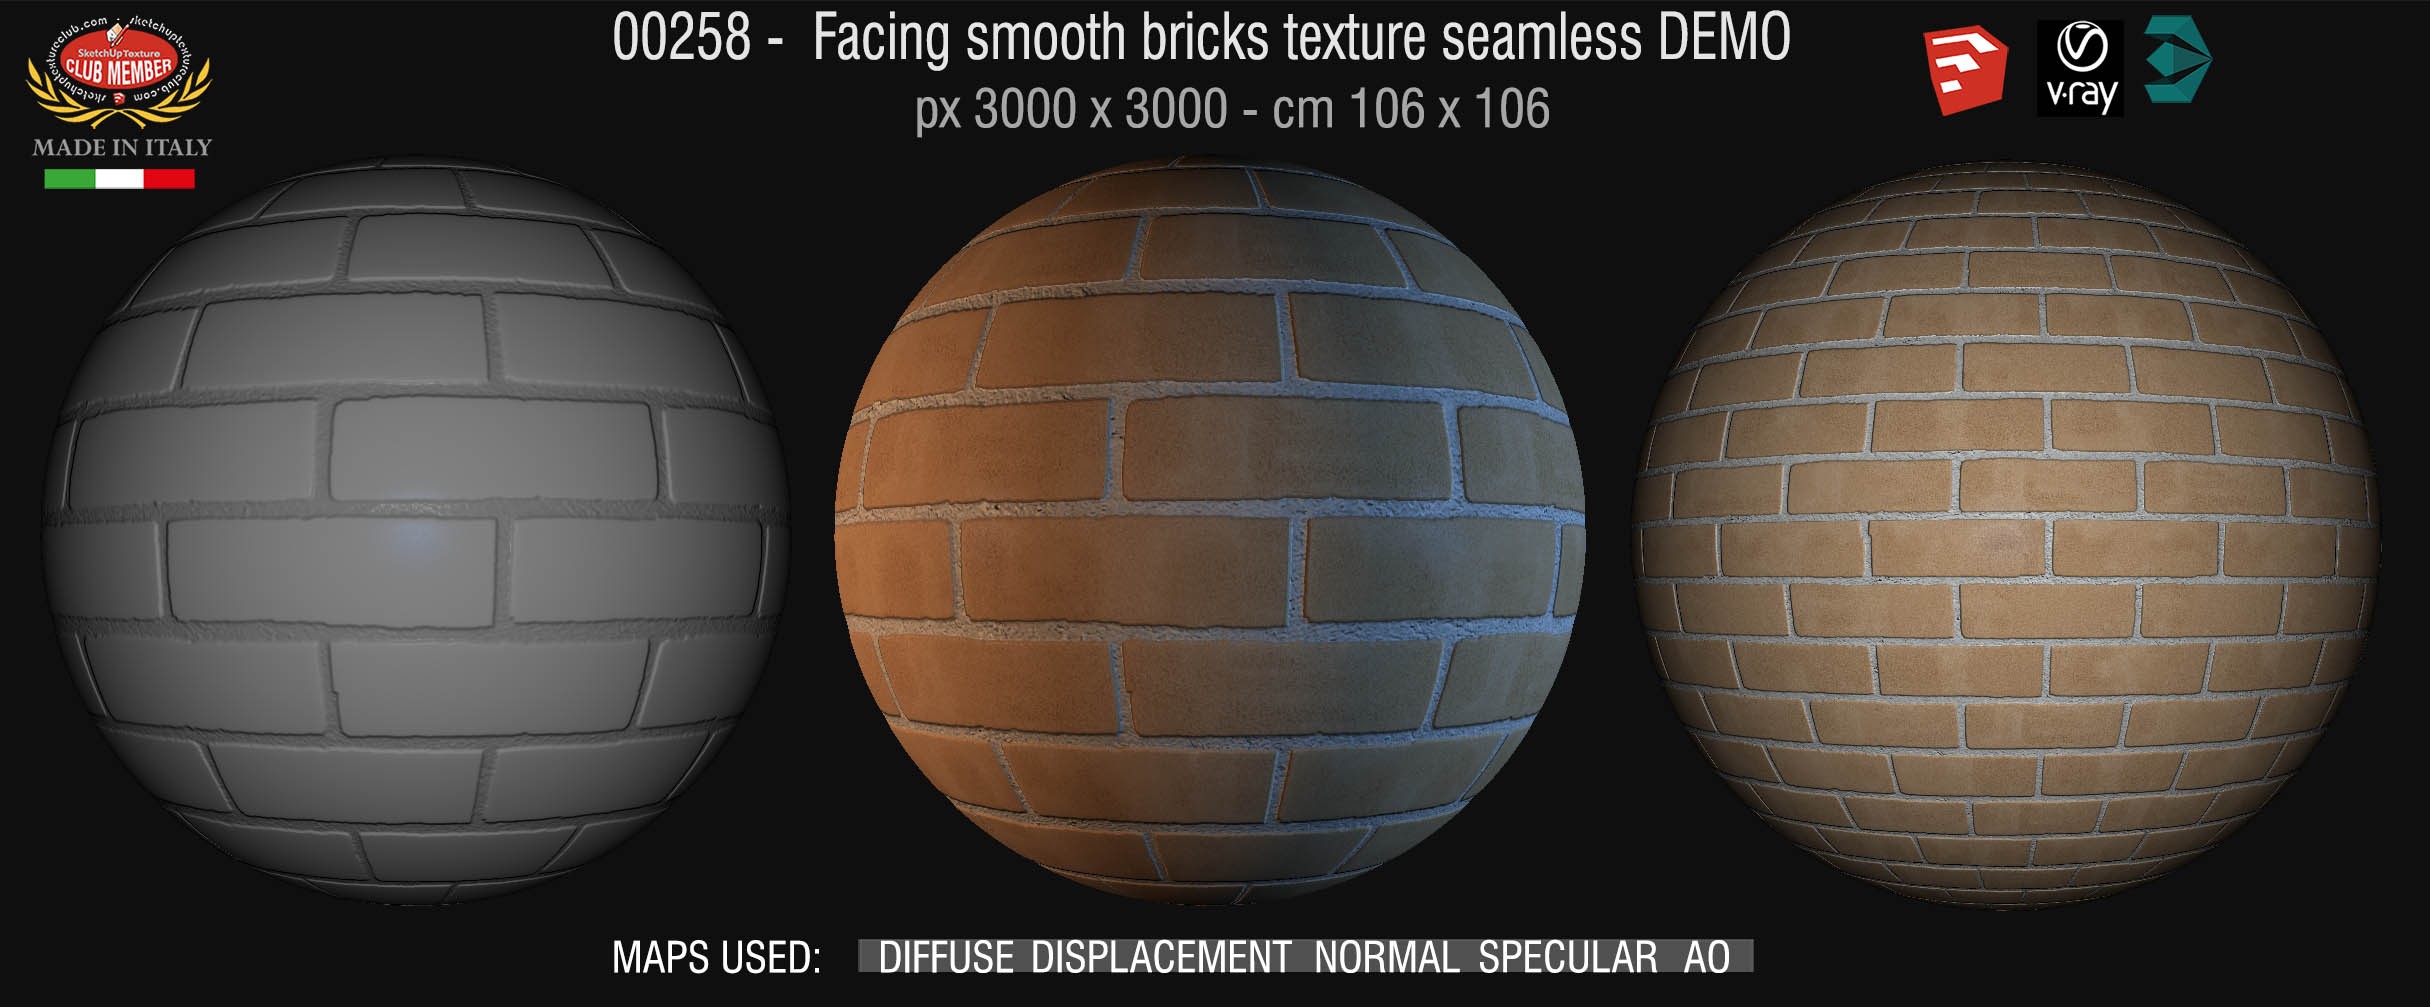 00258 Facing smooth bricks texture seamless + maps DEMO